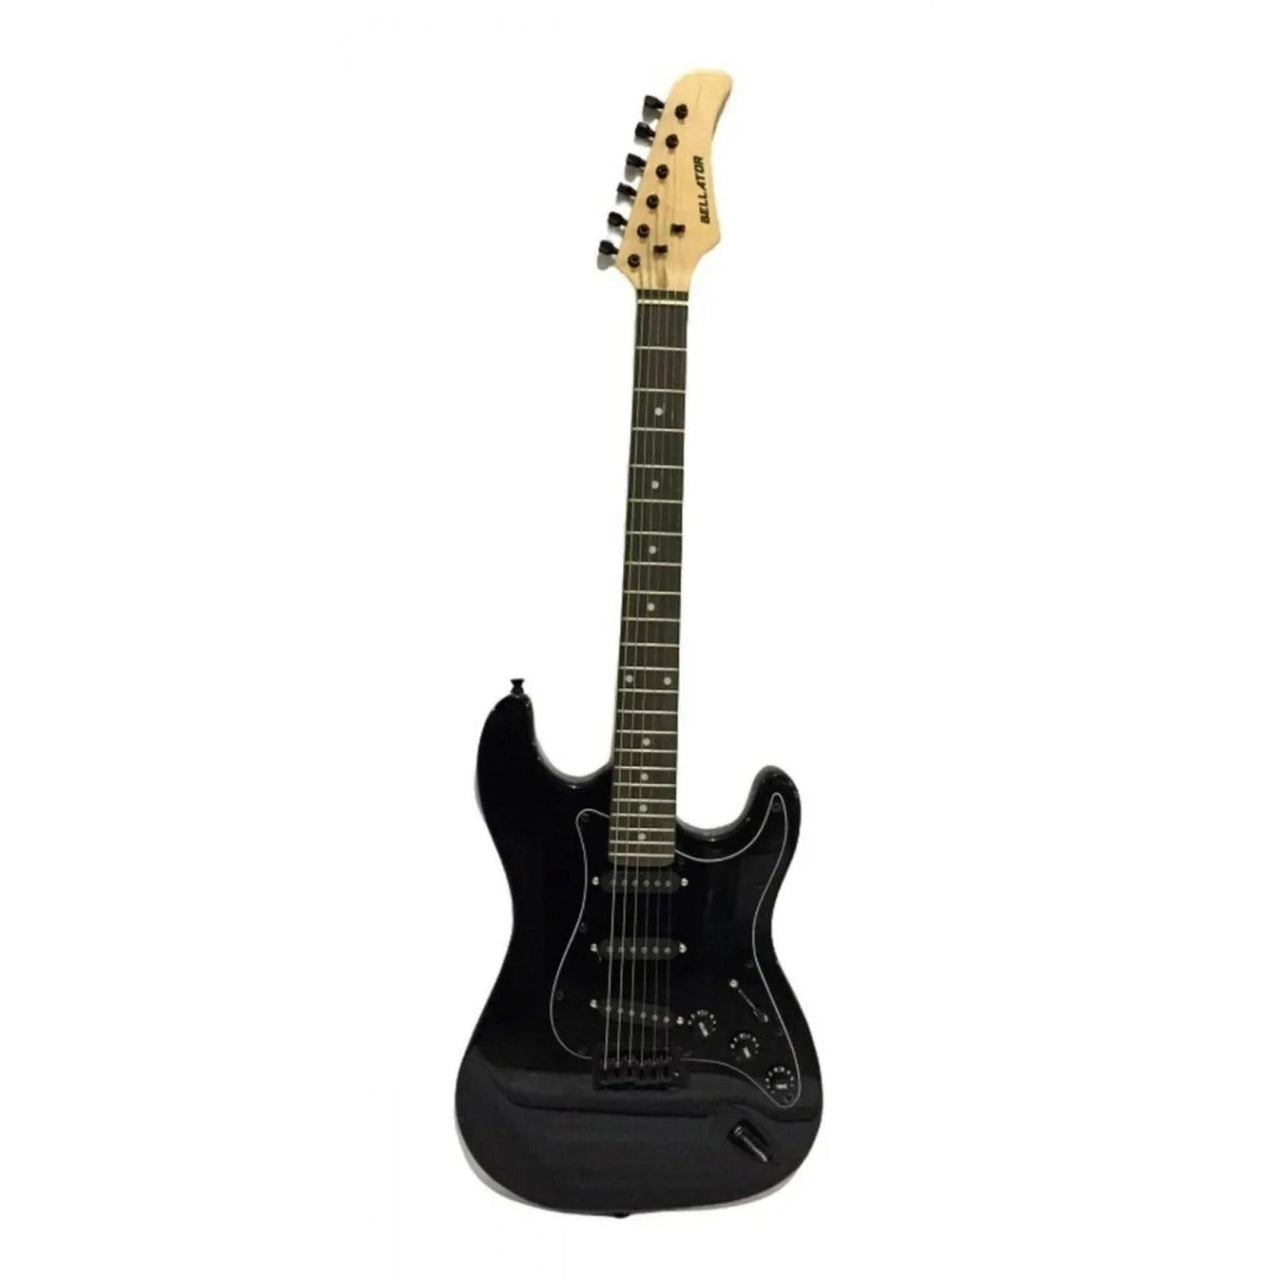 Guitarra Electrica Bellator Neg10wst bkb Stratocaster Paquete Negra Mica Negra